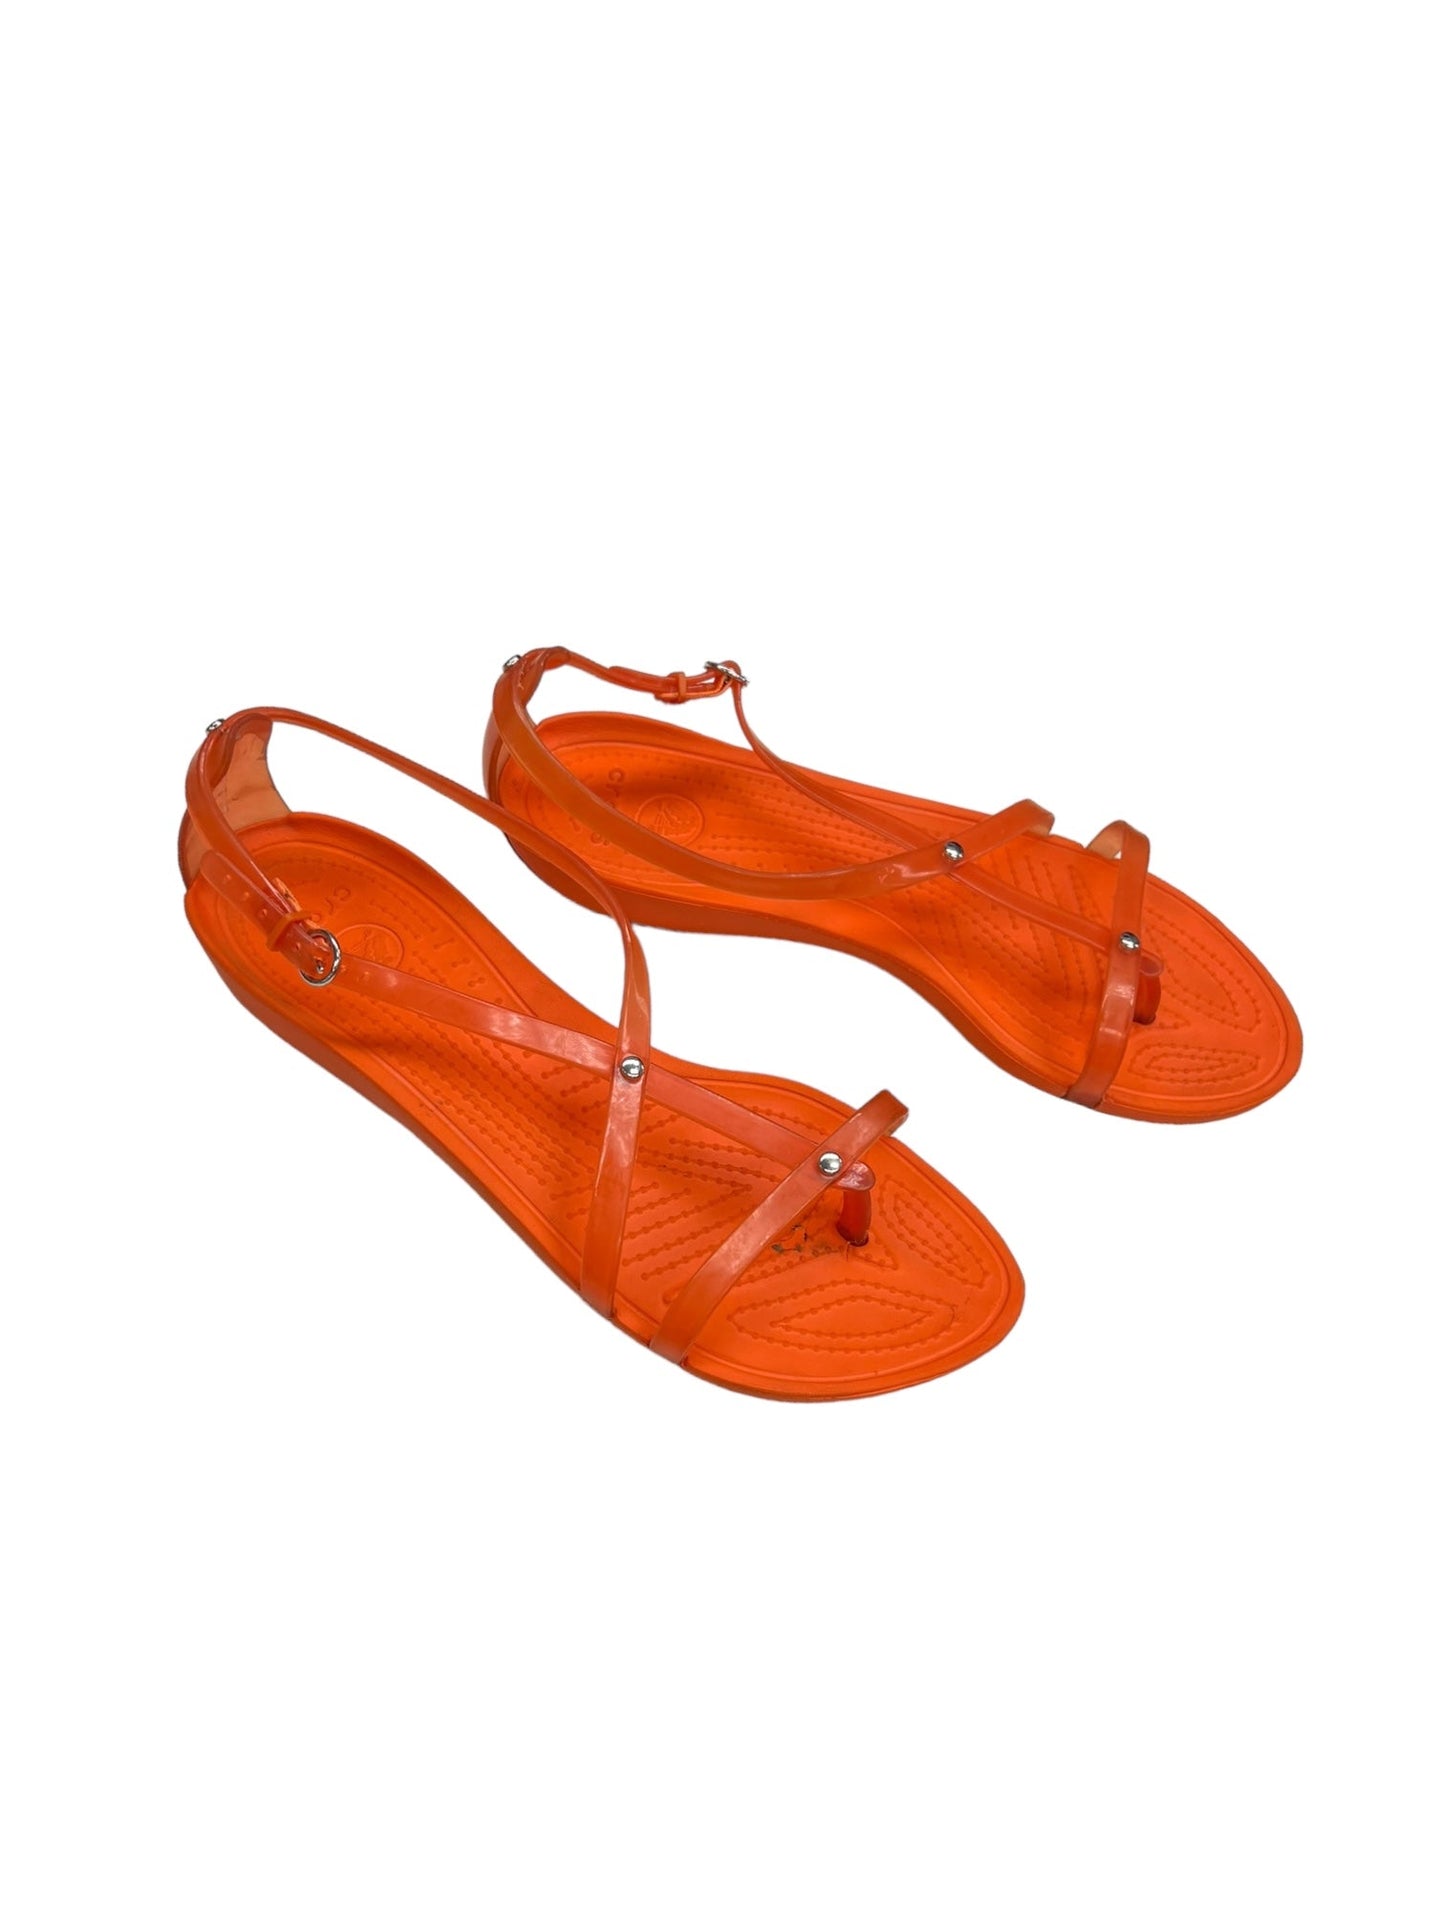 Orange Sandals Flats Crocs, Size 8